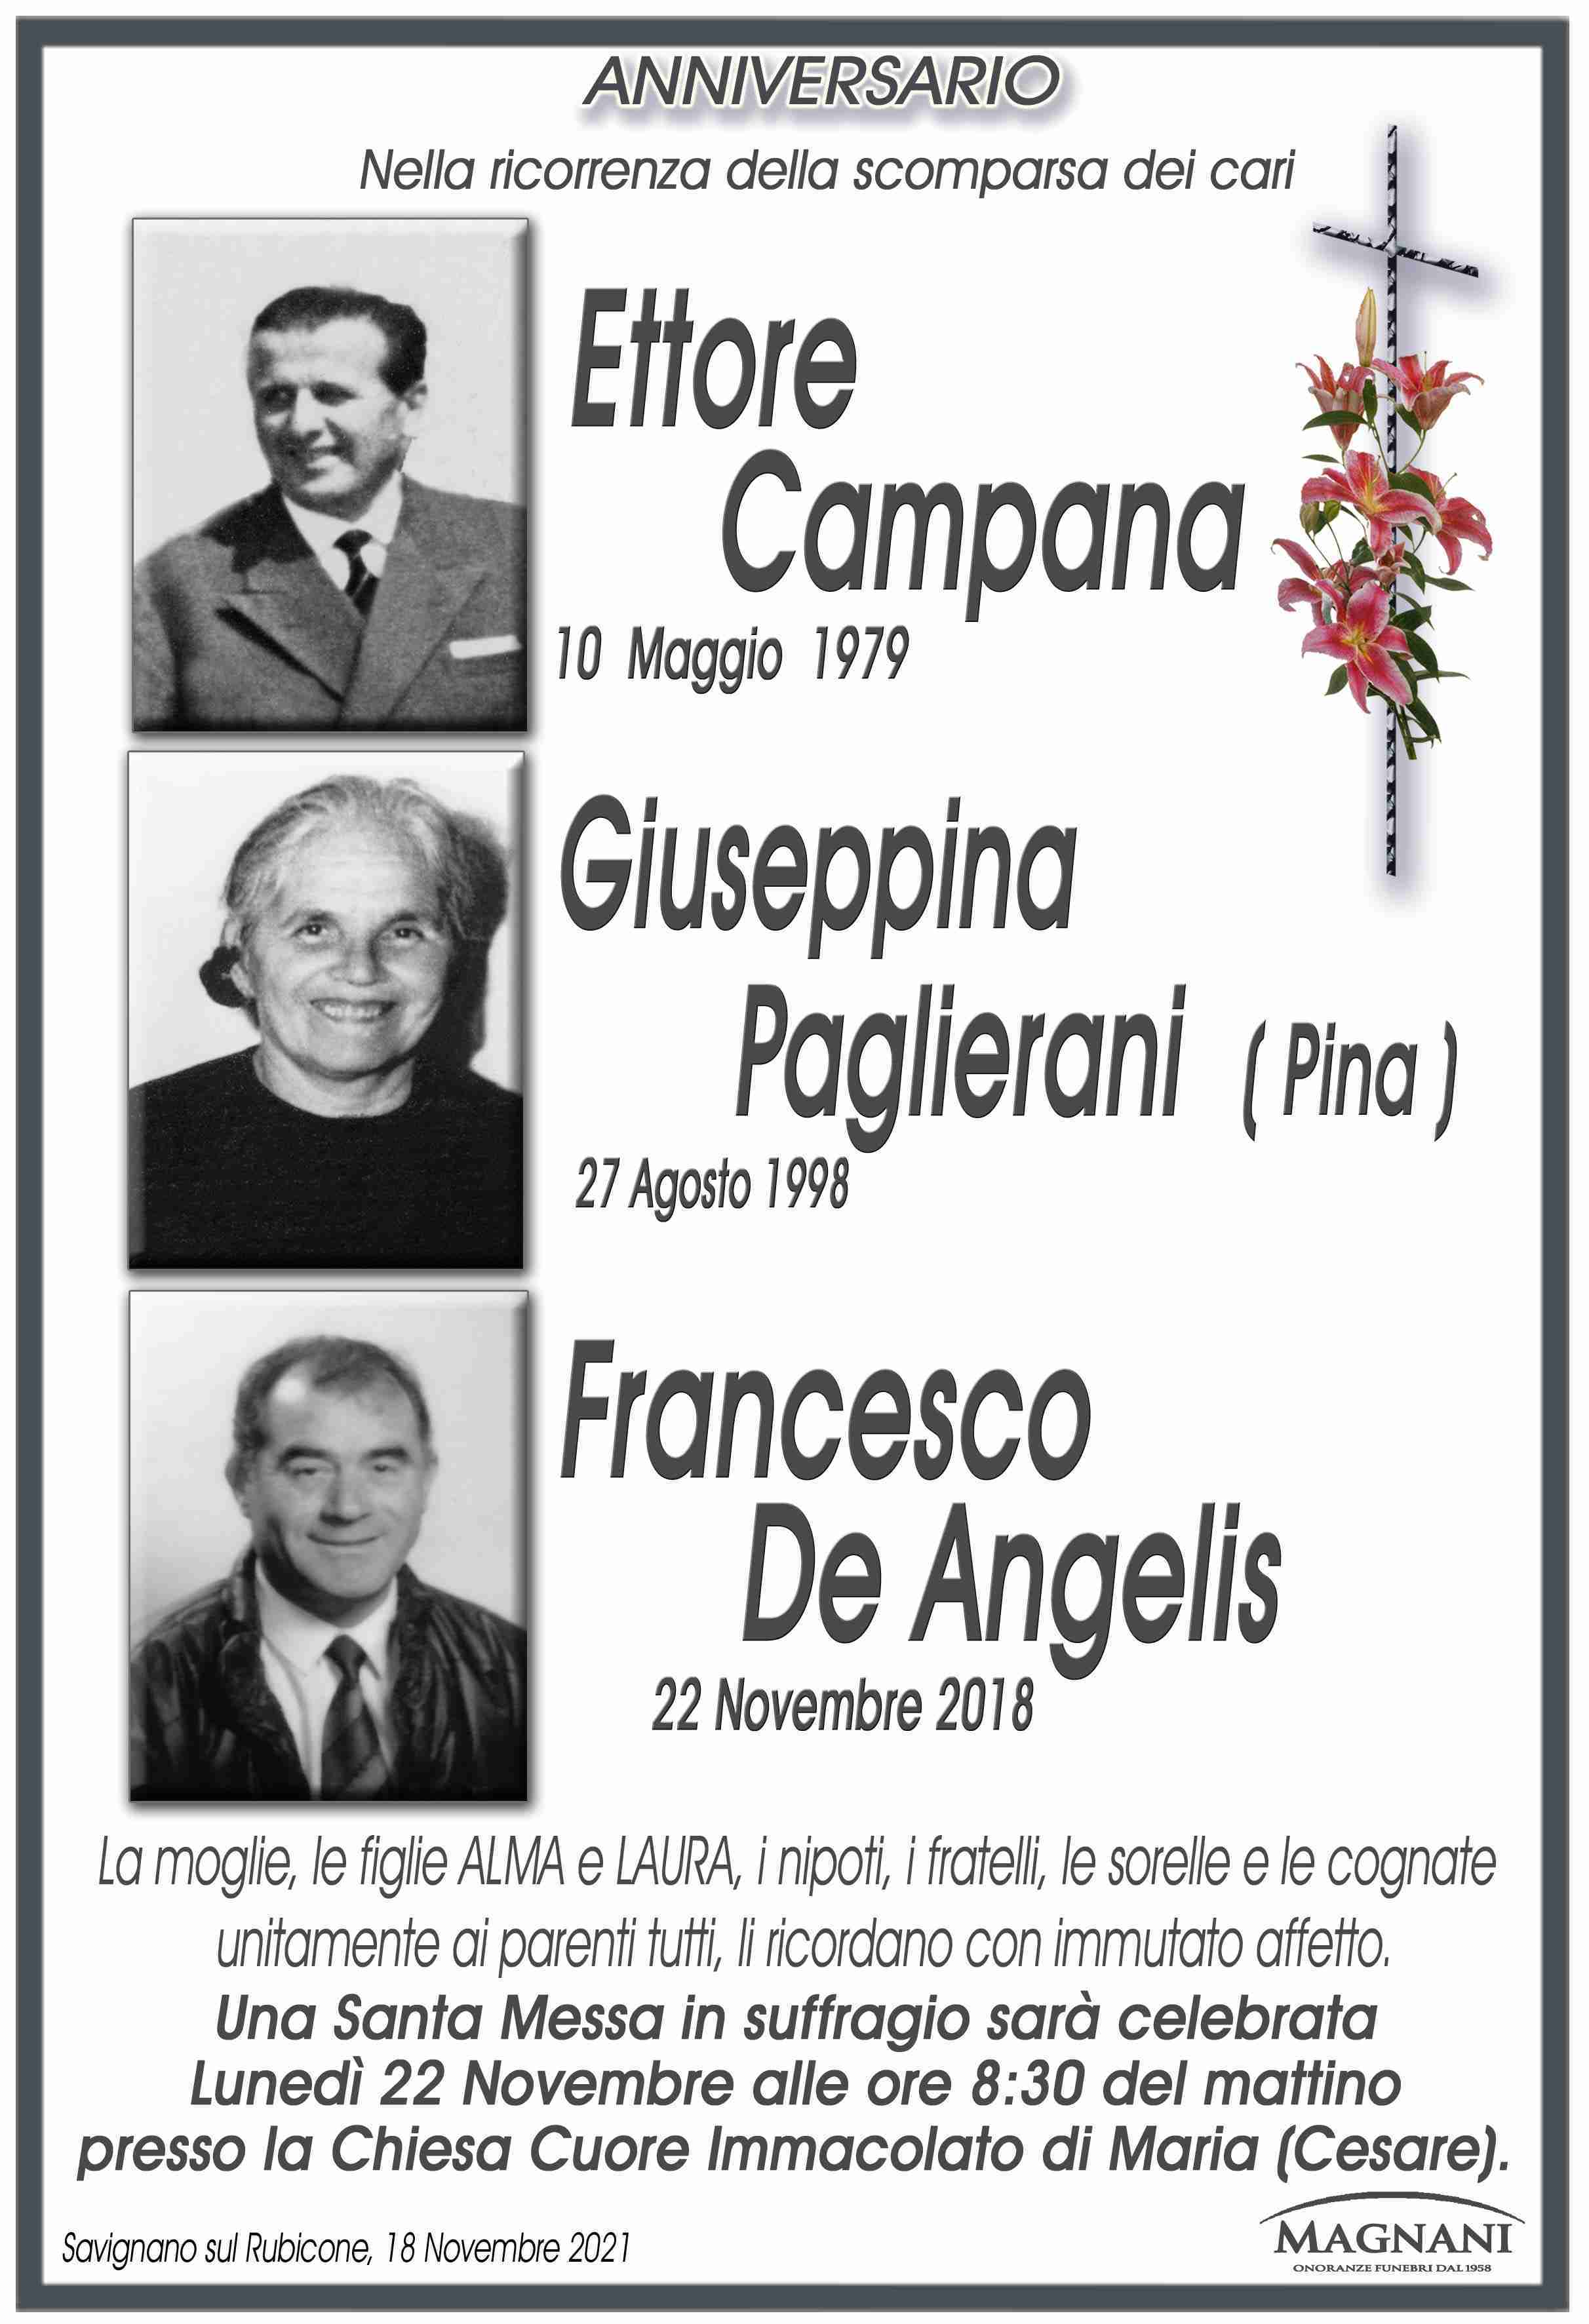 Ettore Campana, Giuseppina Paglierani e Francesco De Angelis